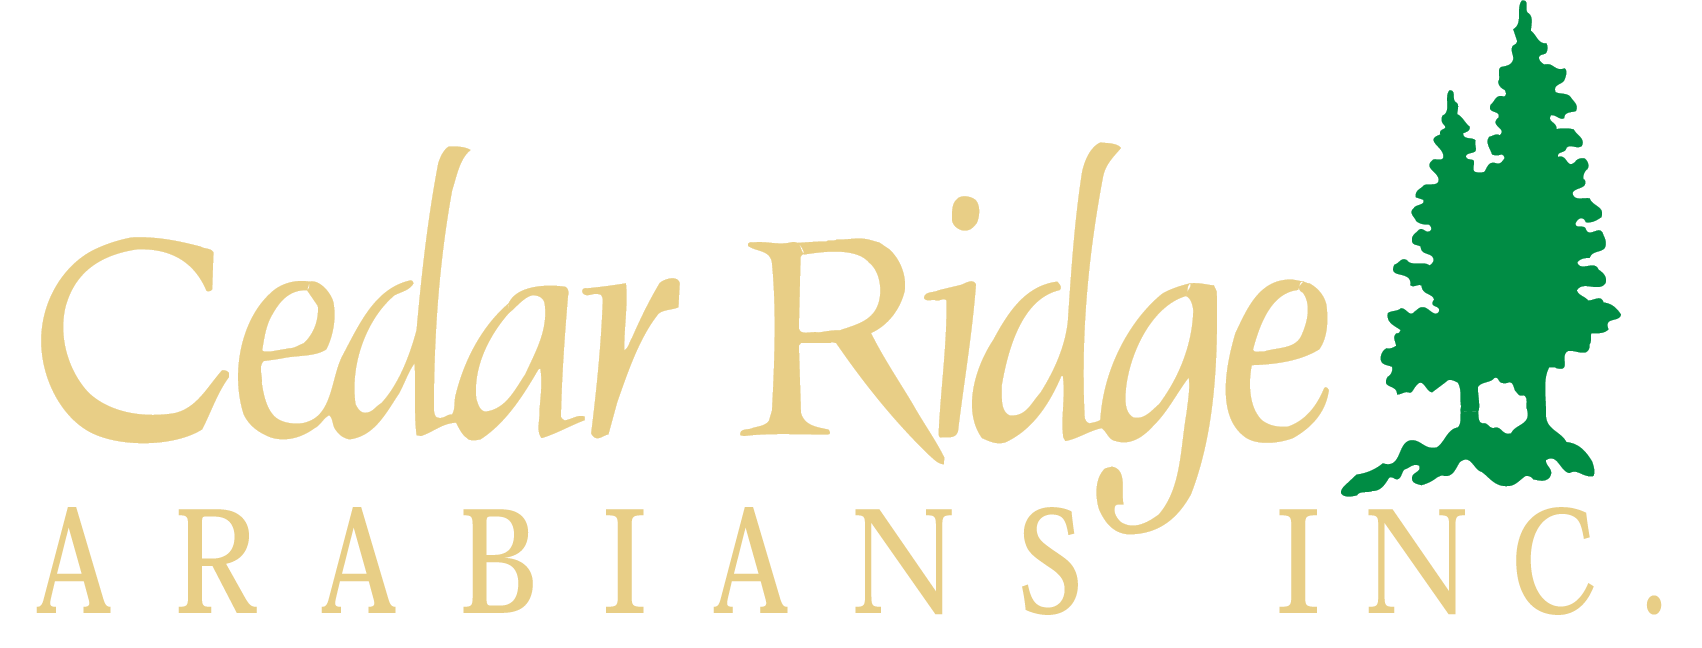 Cedar-Ridge-Arab-goldgrn.png